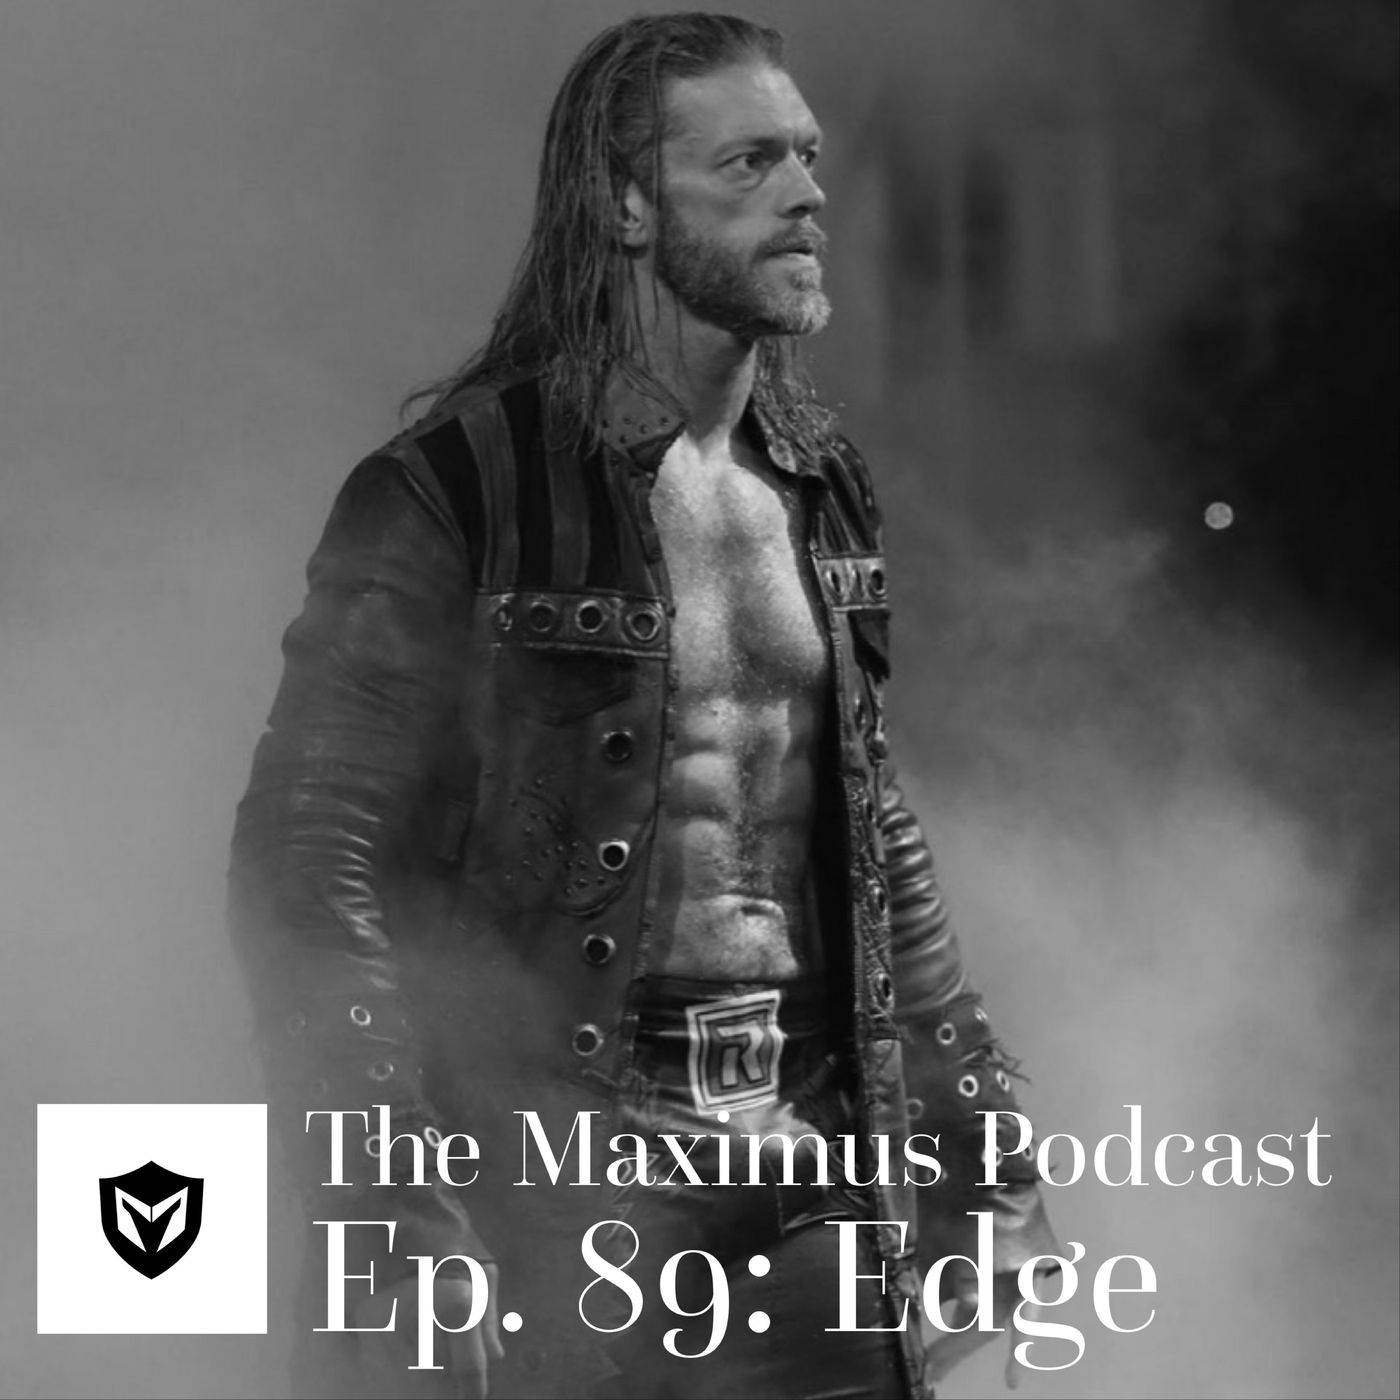 The Maximus Podcast Ep. 89 - Edge